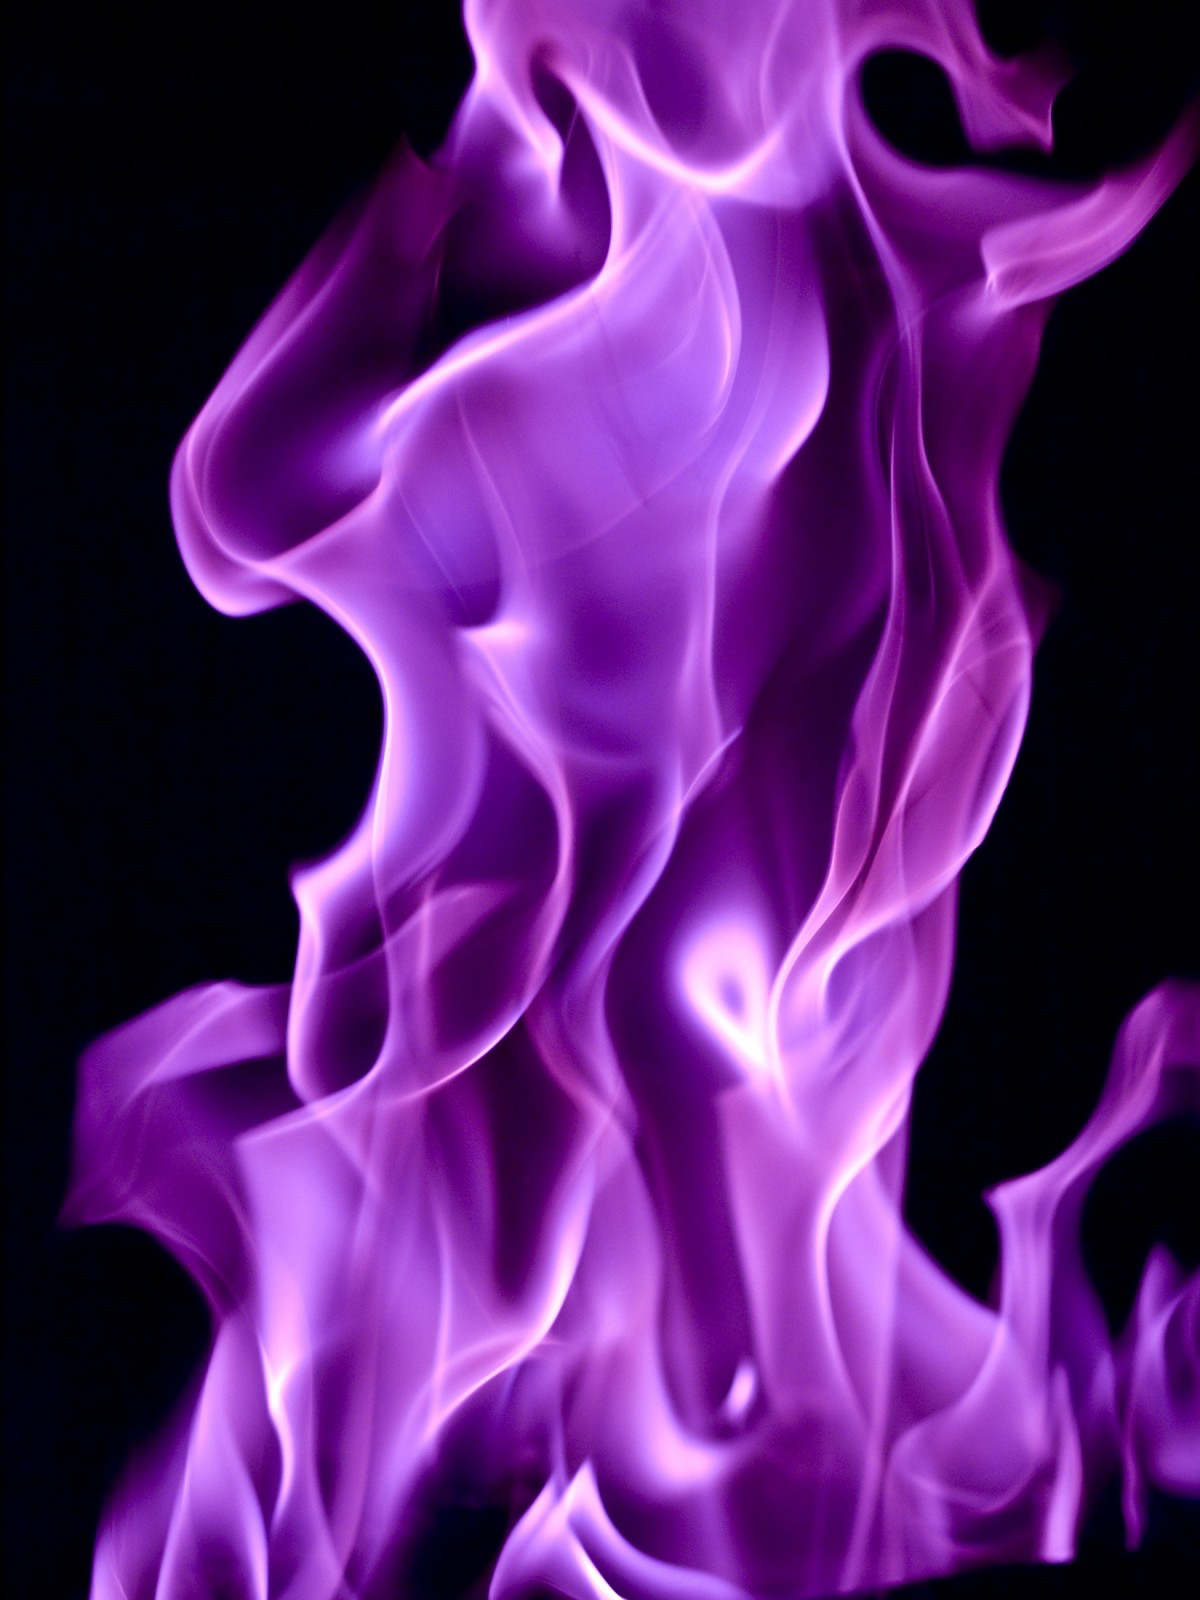  purple fire  The Harry Potter Lexicon